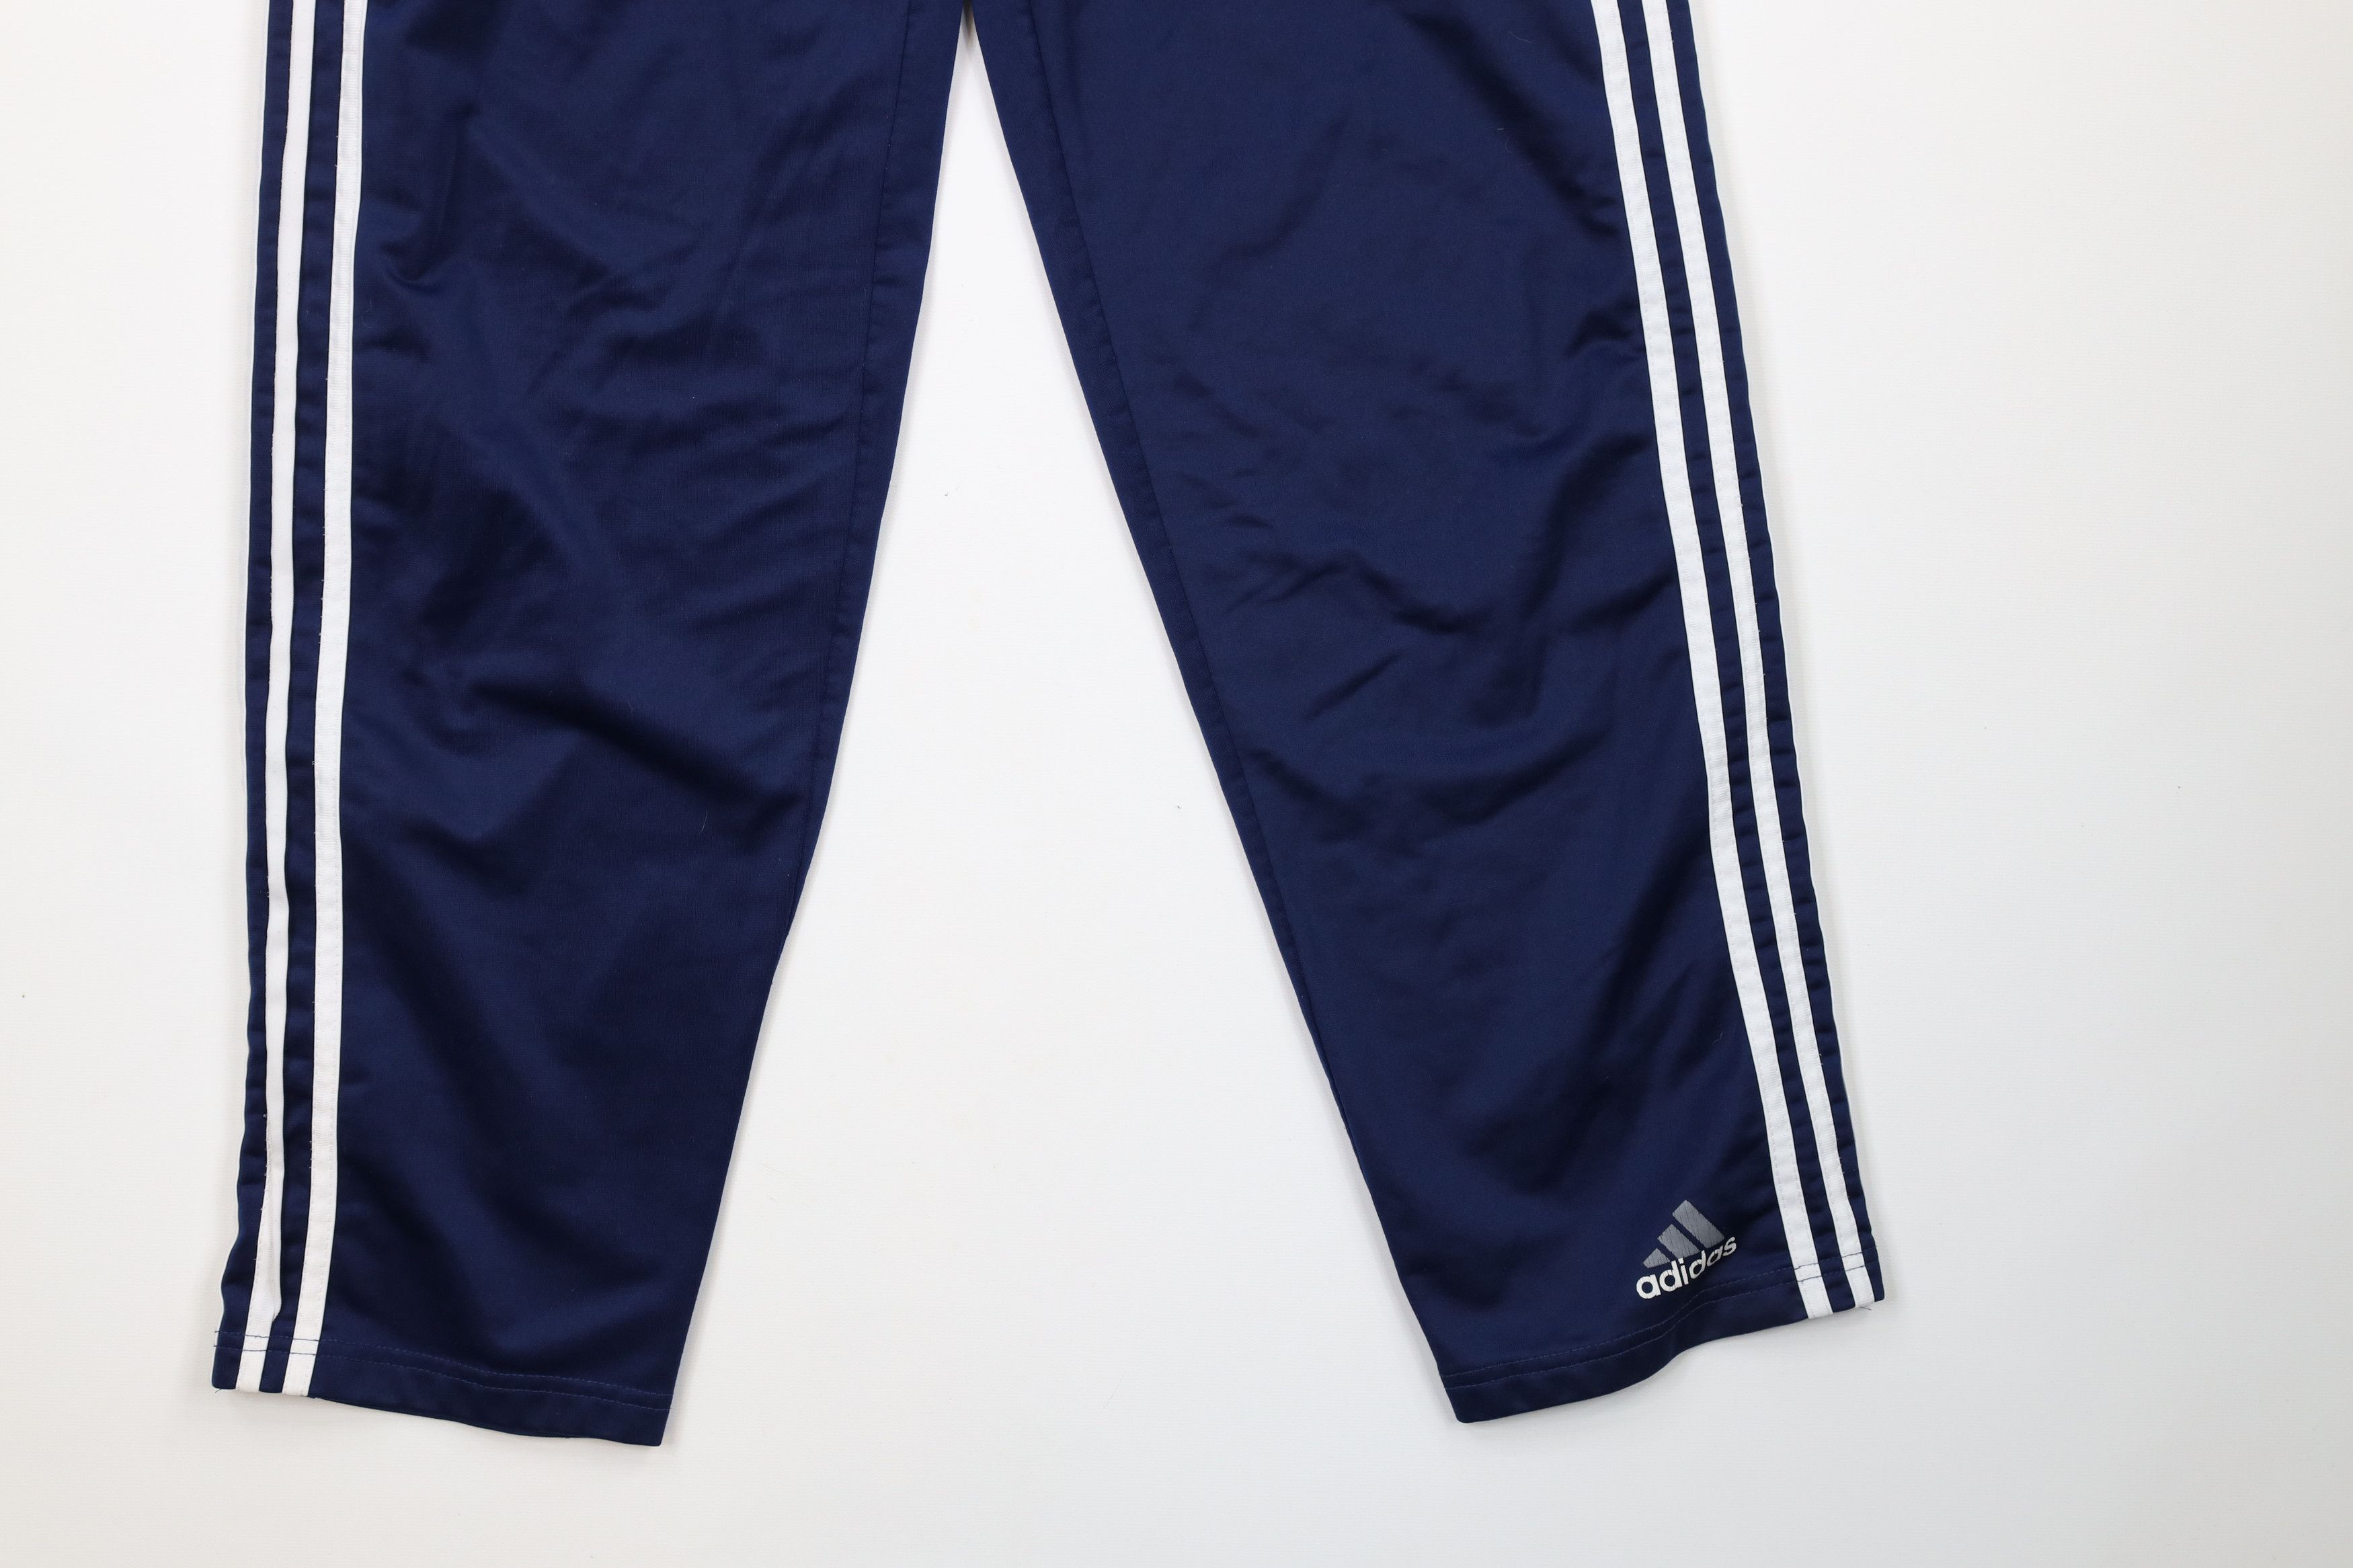 Adidas Vintage 90s Adidas Striped Tearaway Sweatpants Pants Blue Size US 34 / EU 50 - 4 Thumbnail